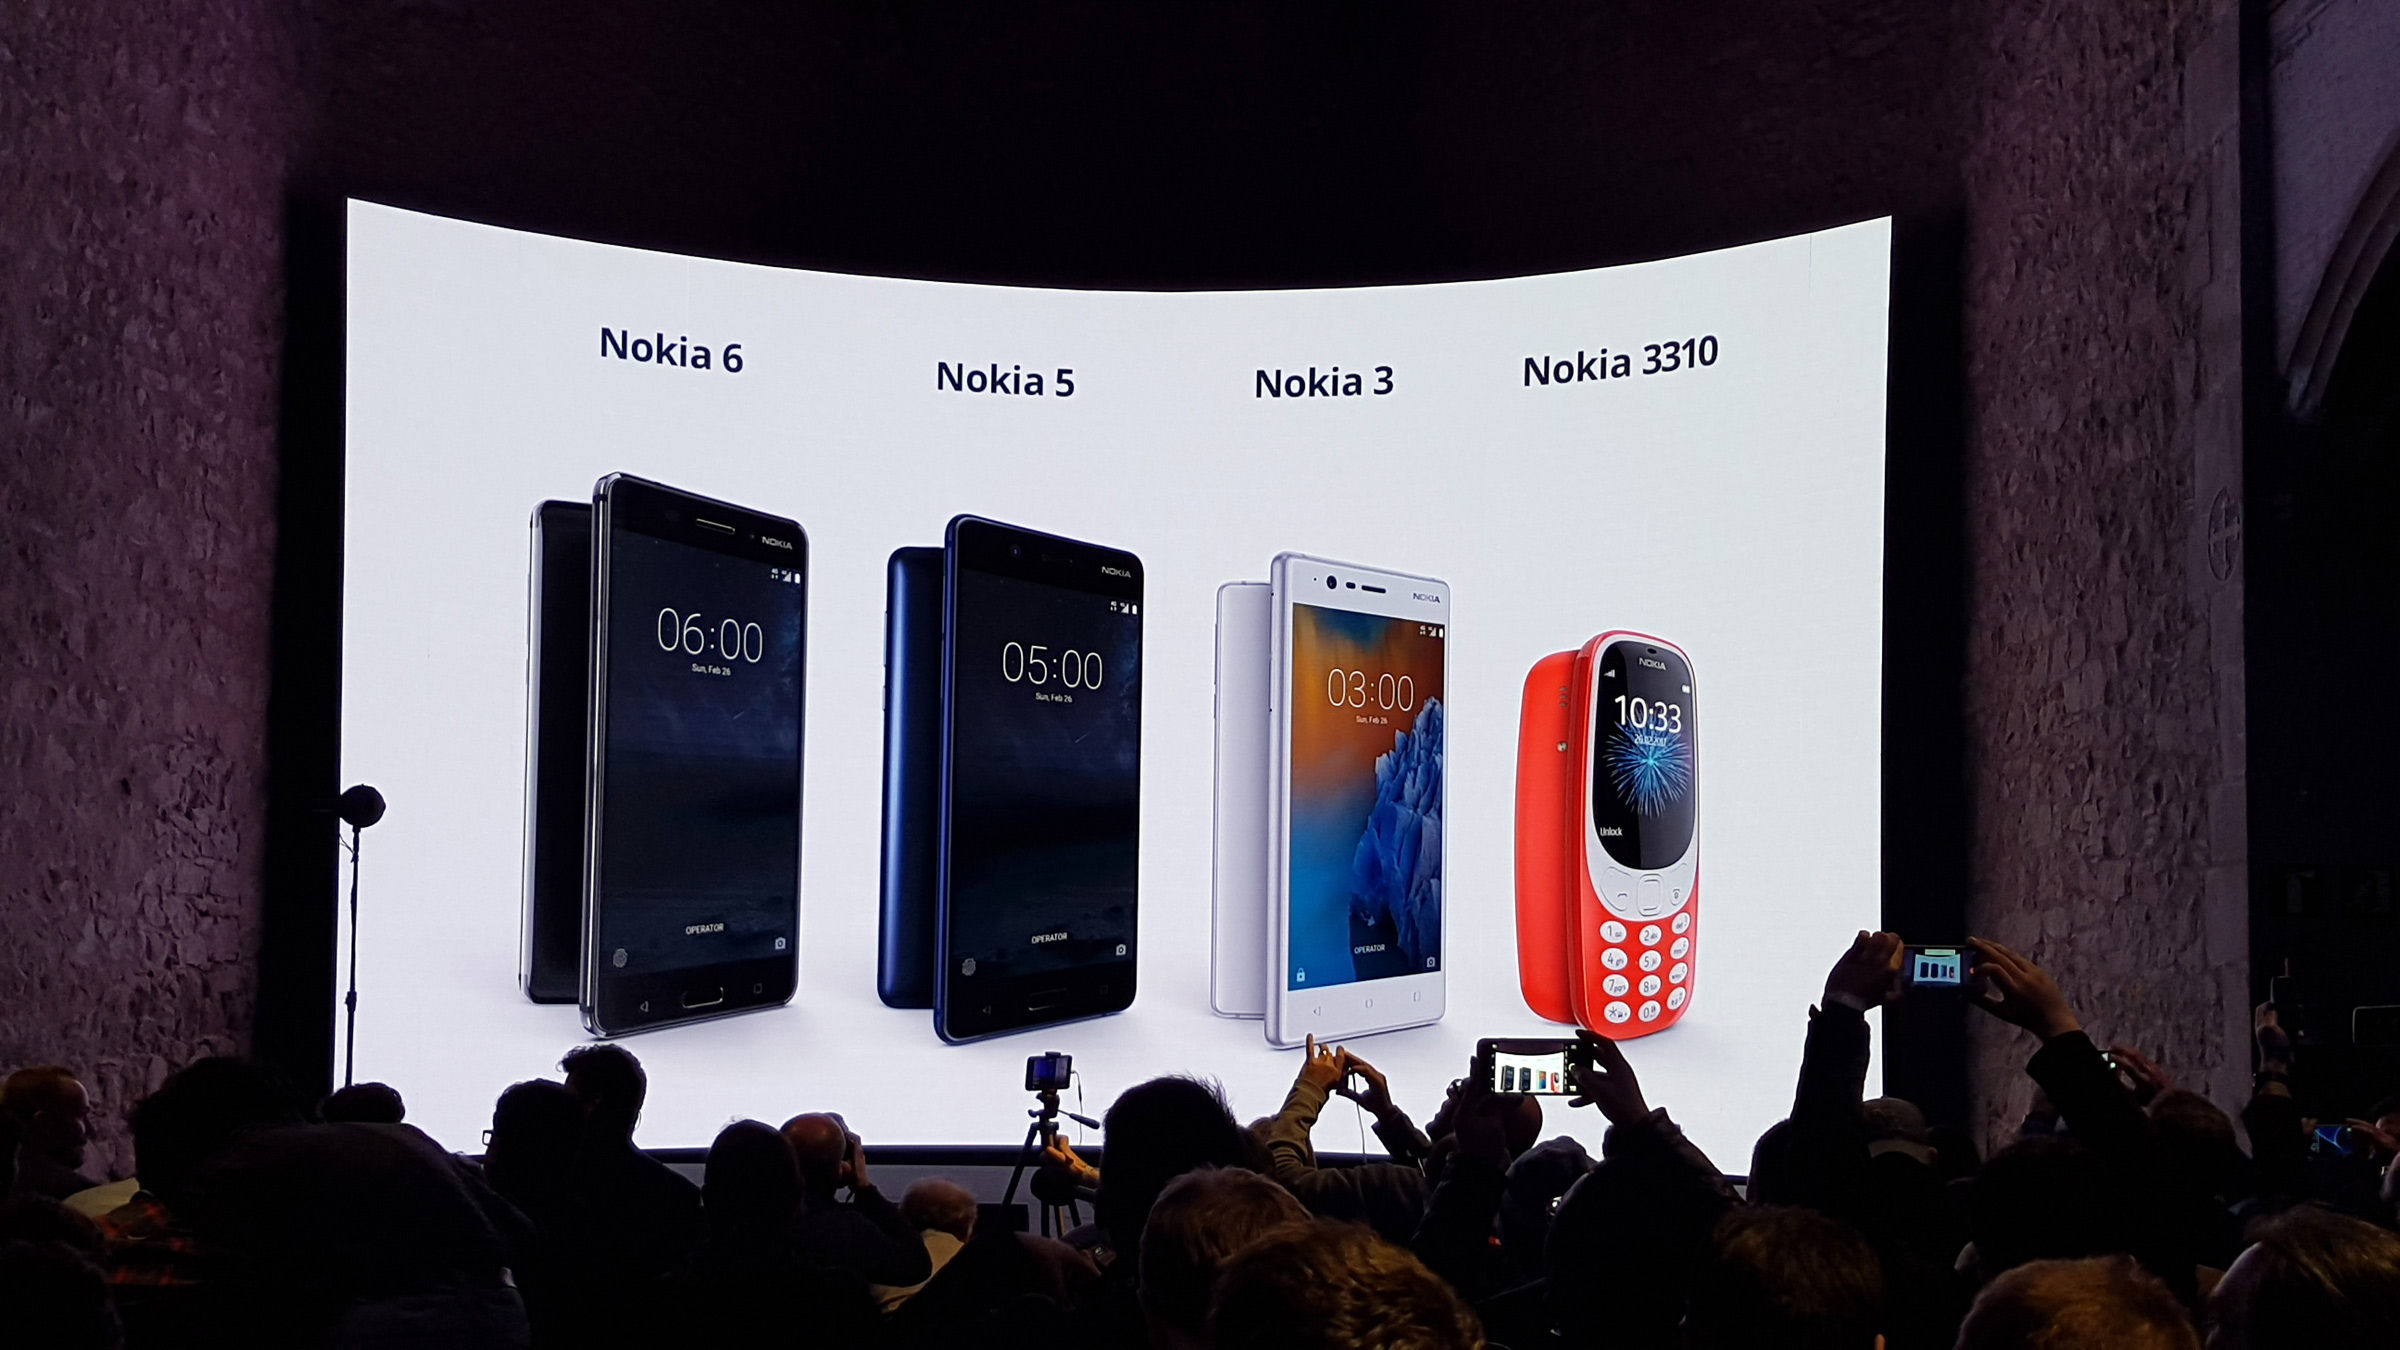 MWC 小總結：Samsung Galaxy S7 Edge 榮獲最佳智慧型手機；Nokia 3310 人氣最旺 Youtube 兩天破 4百萬點擊率！ 4